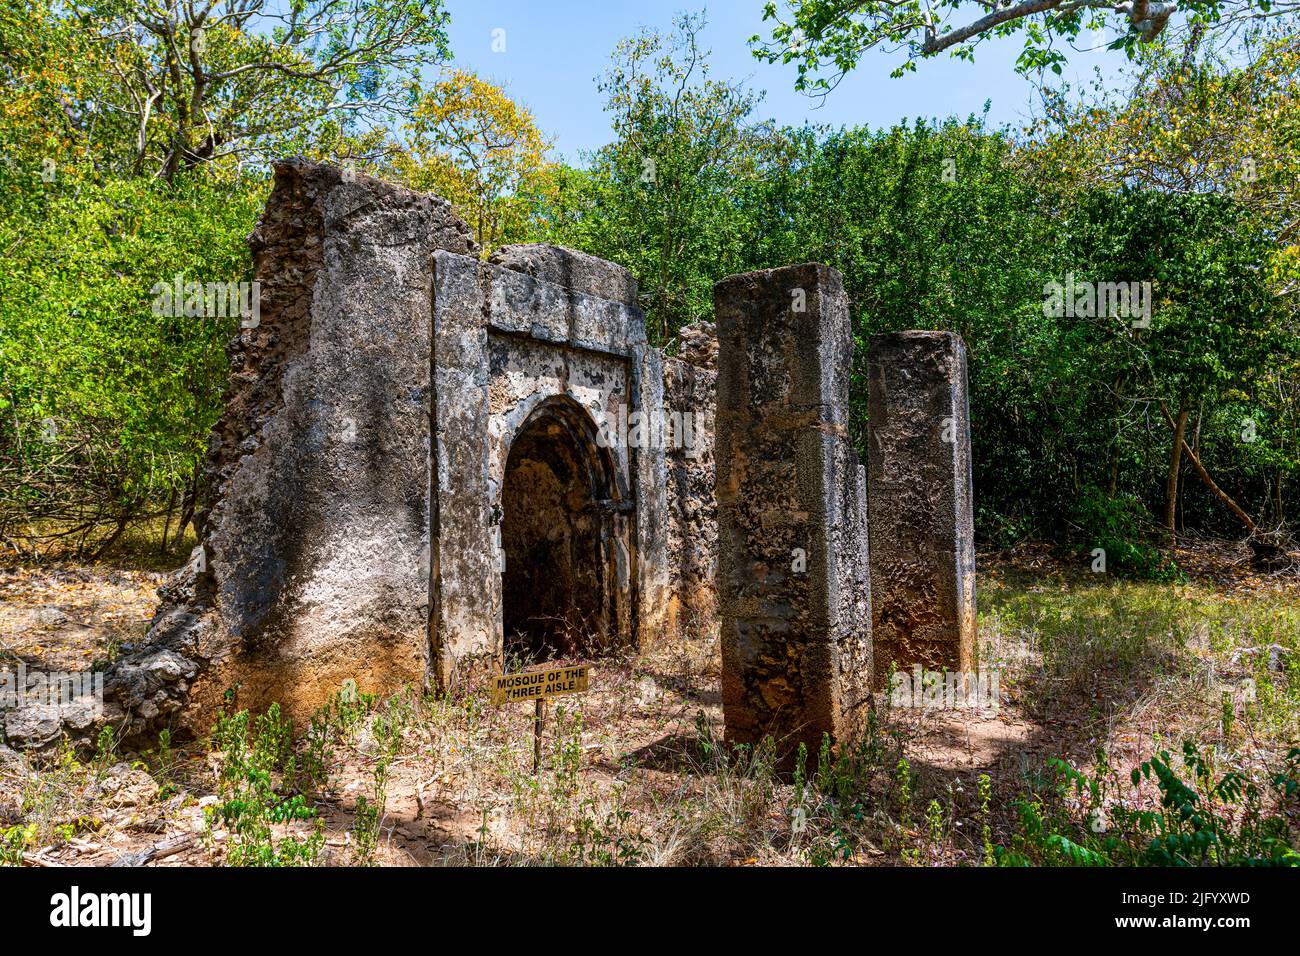 Ruins of medieval Swahili coastal settlements of Gedi, Kilifi, Kenya, East Africa, Africa Stock Photo